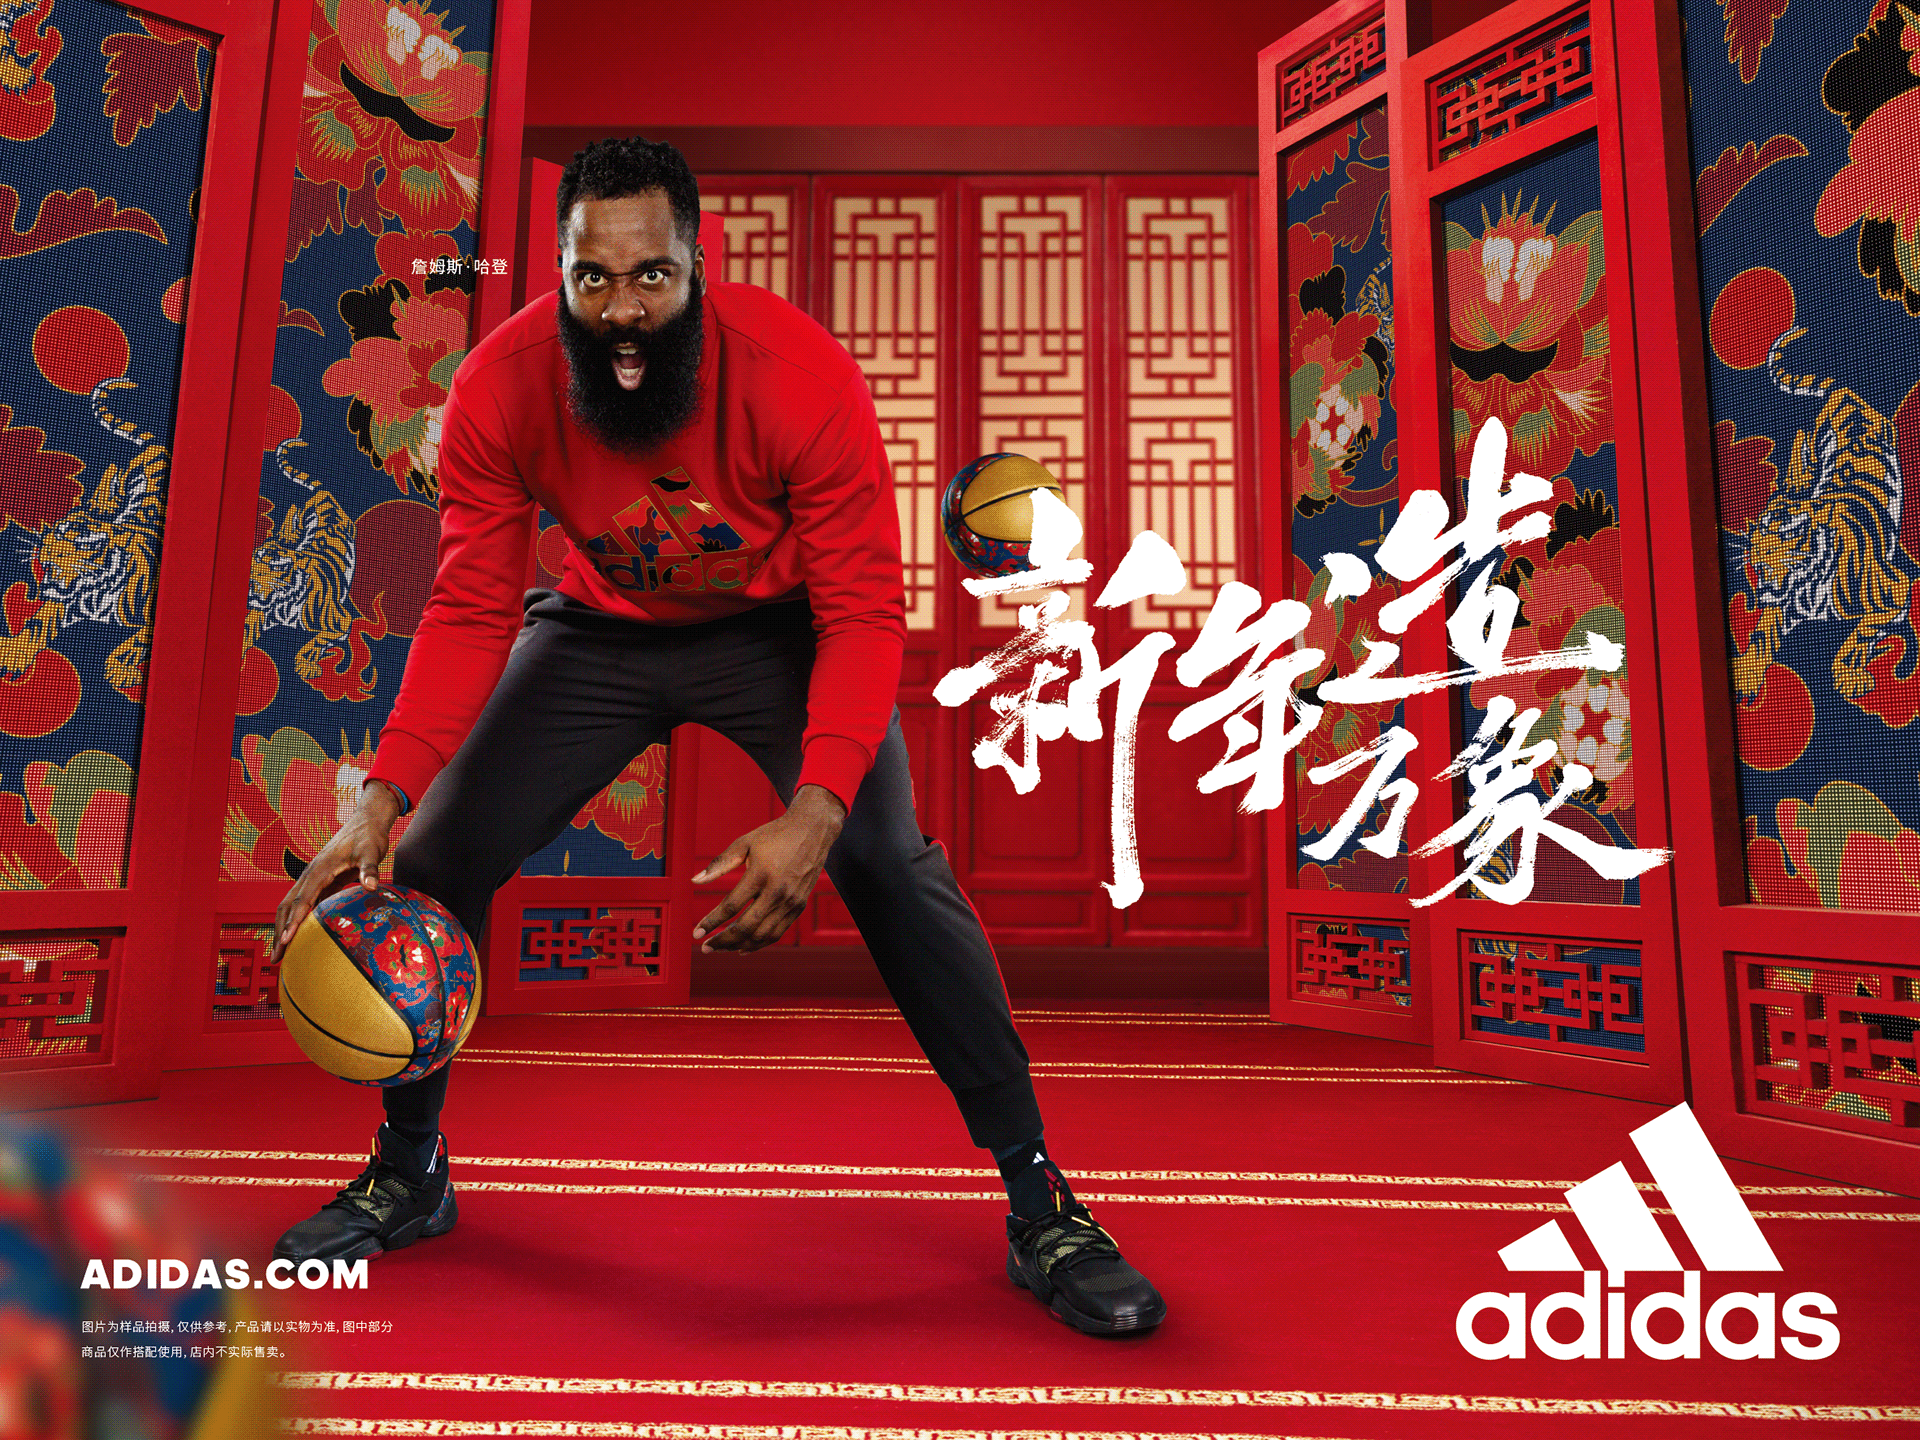 Adidas - New Year on